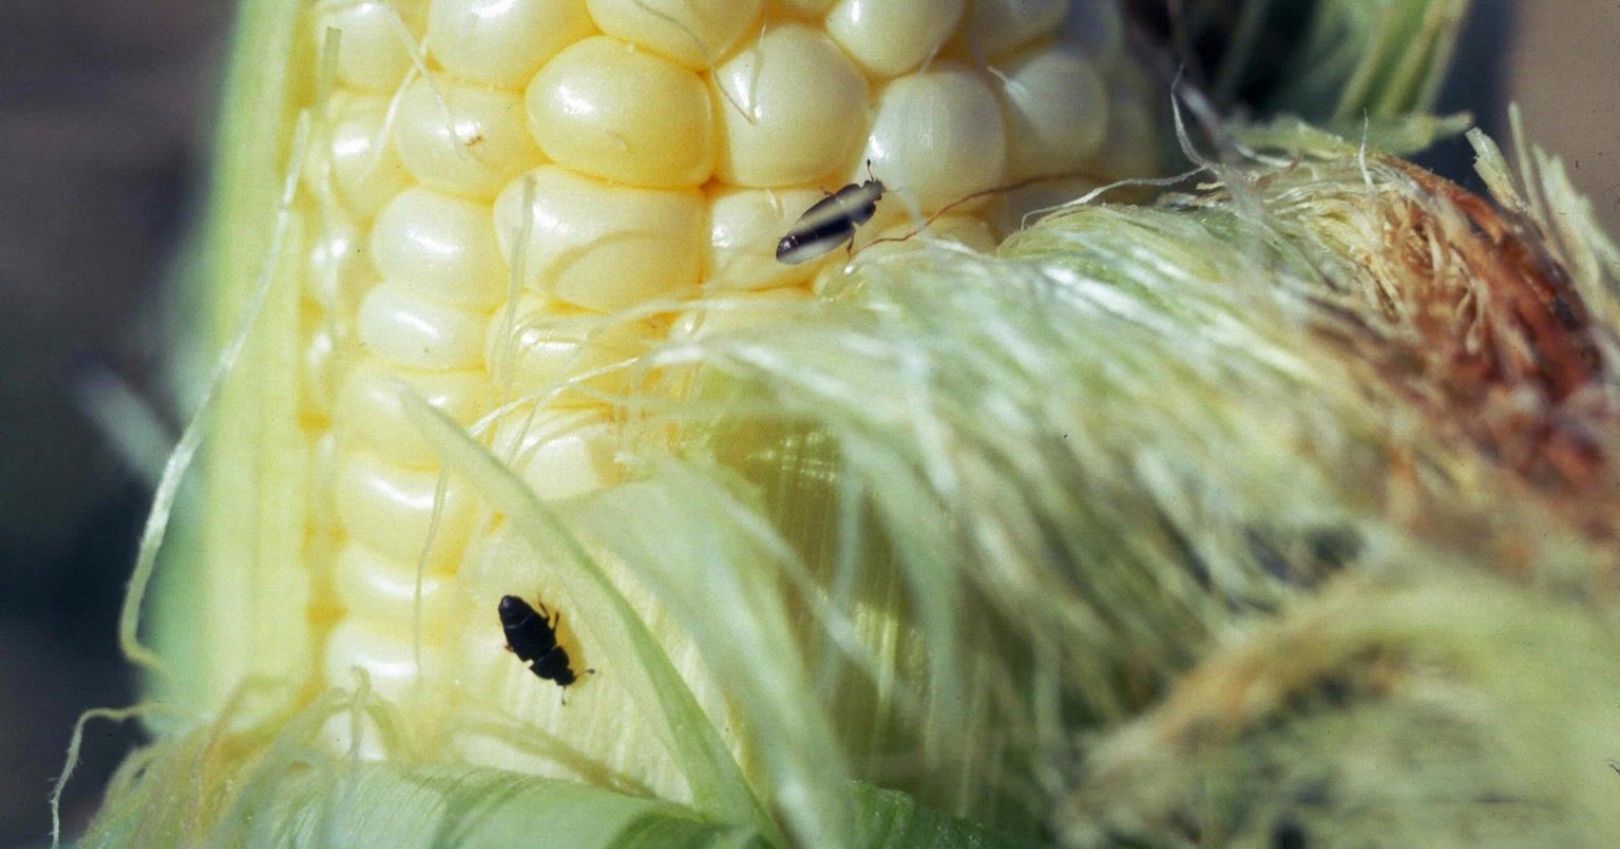 Sap Beetle Adults on Sweet Corn